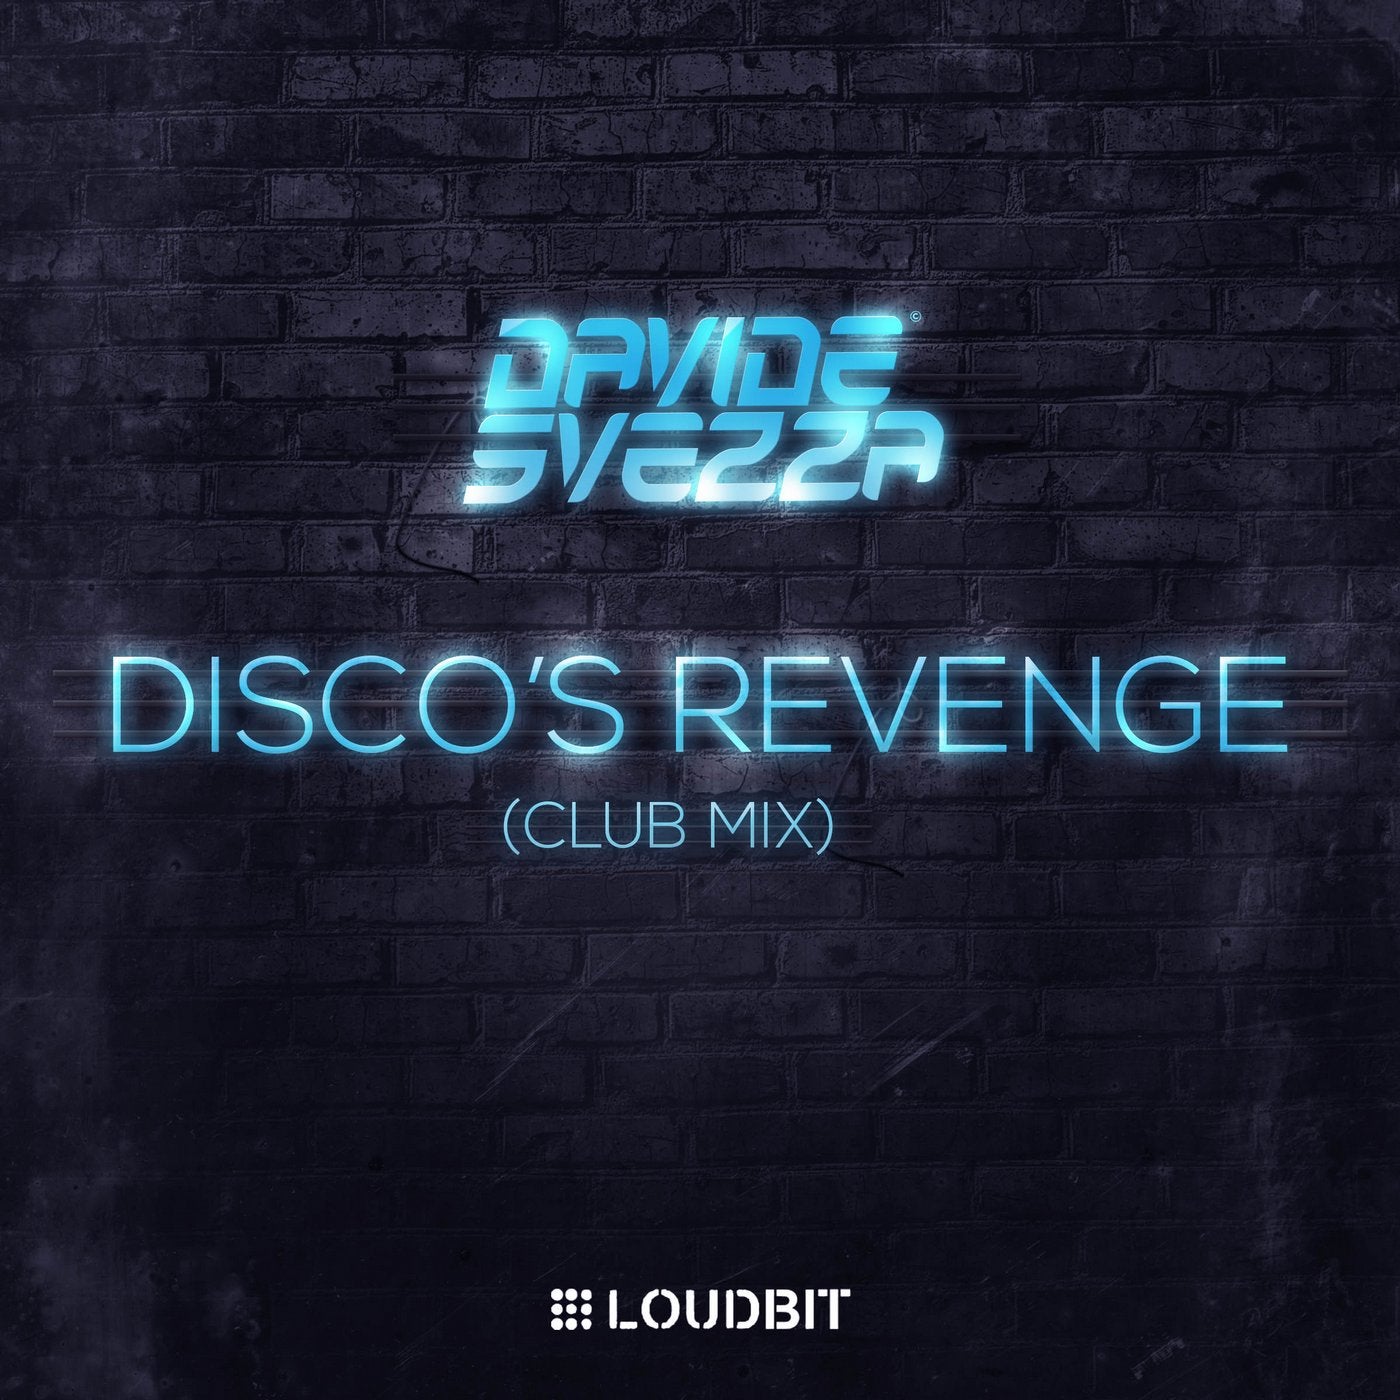 Disco's Revenge